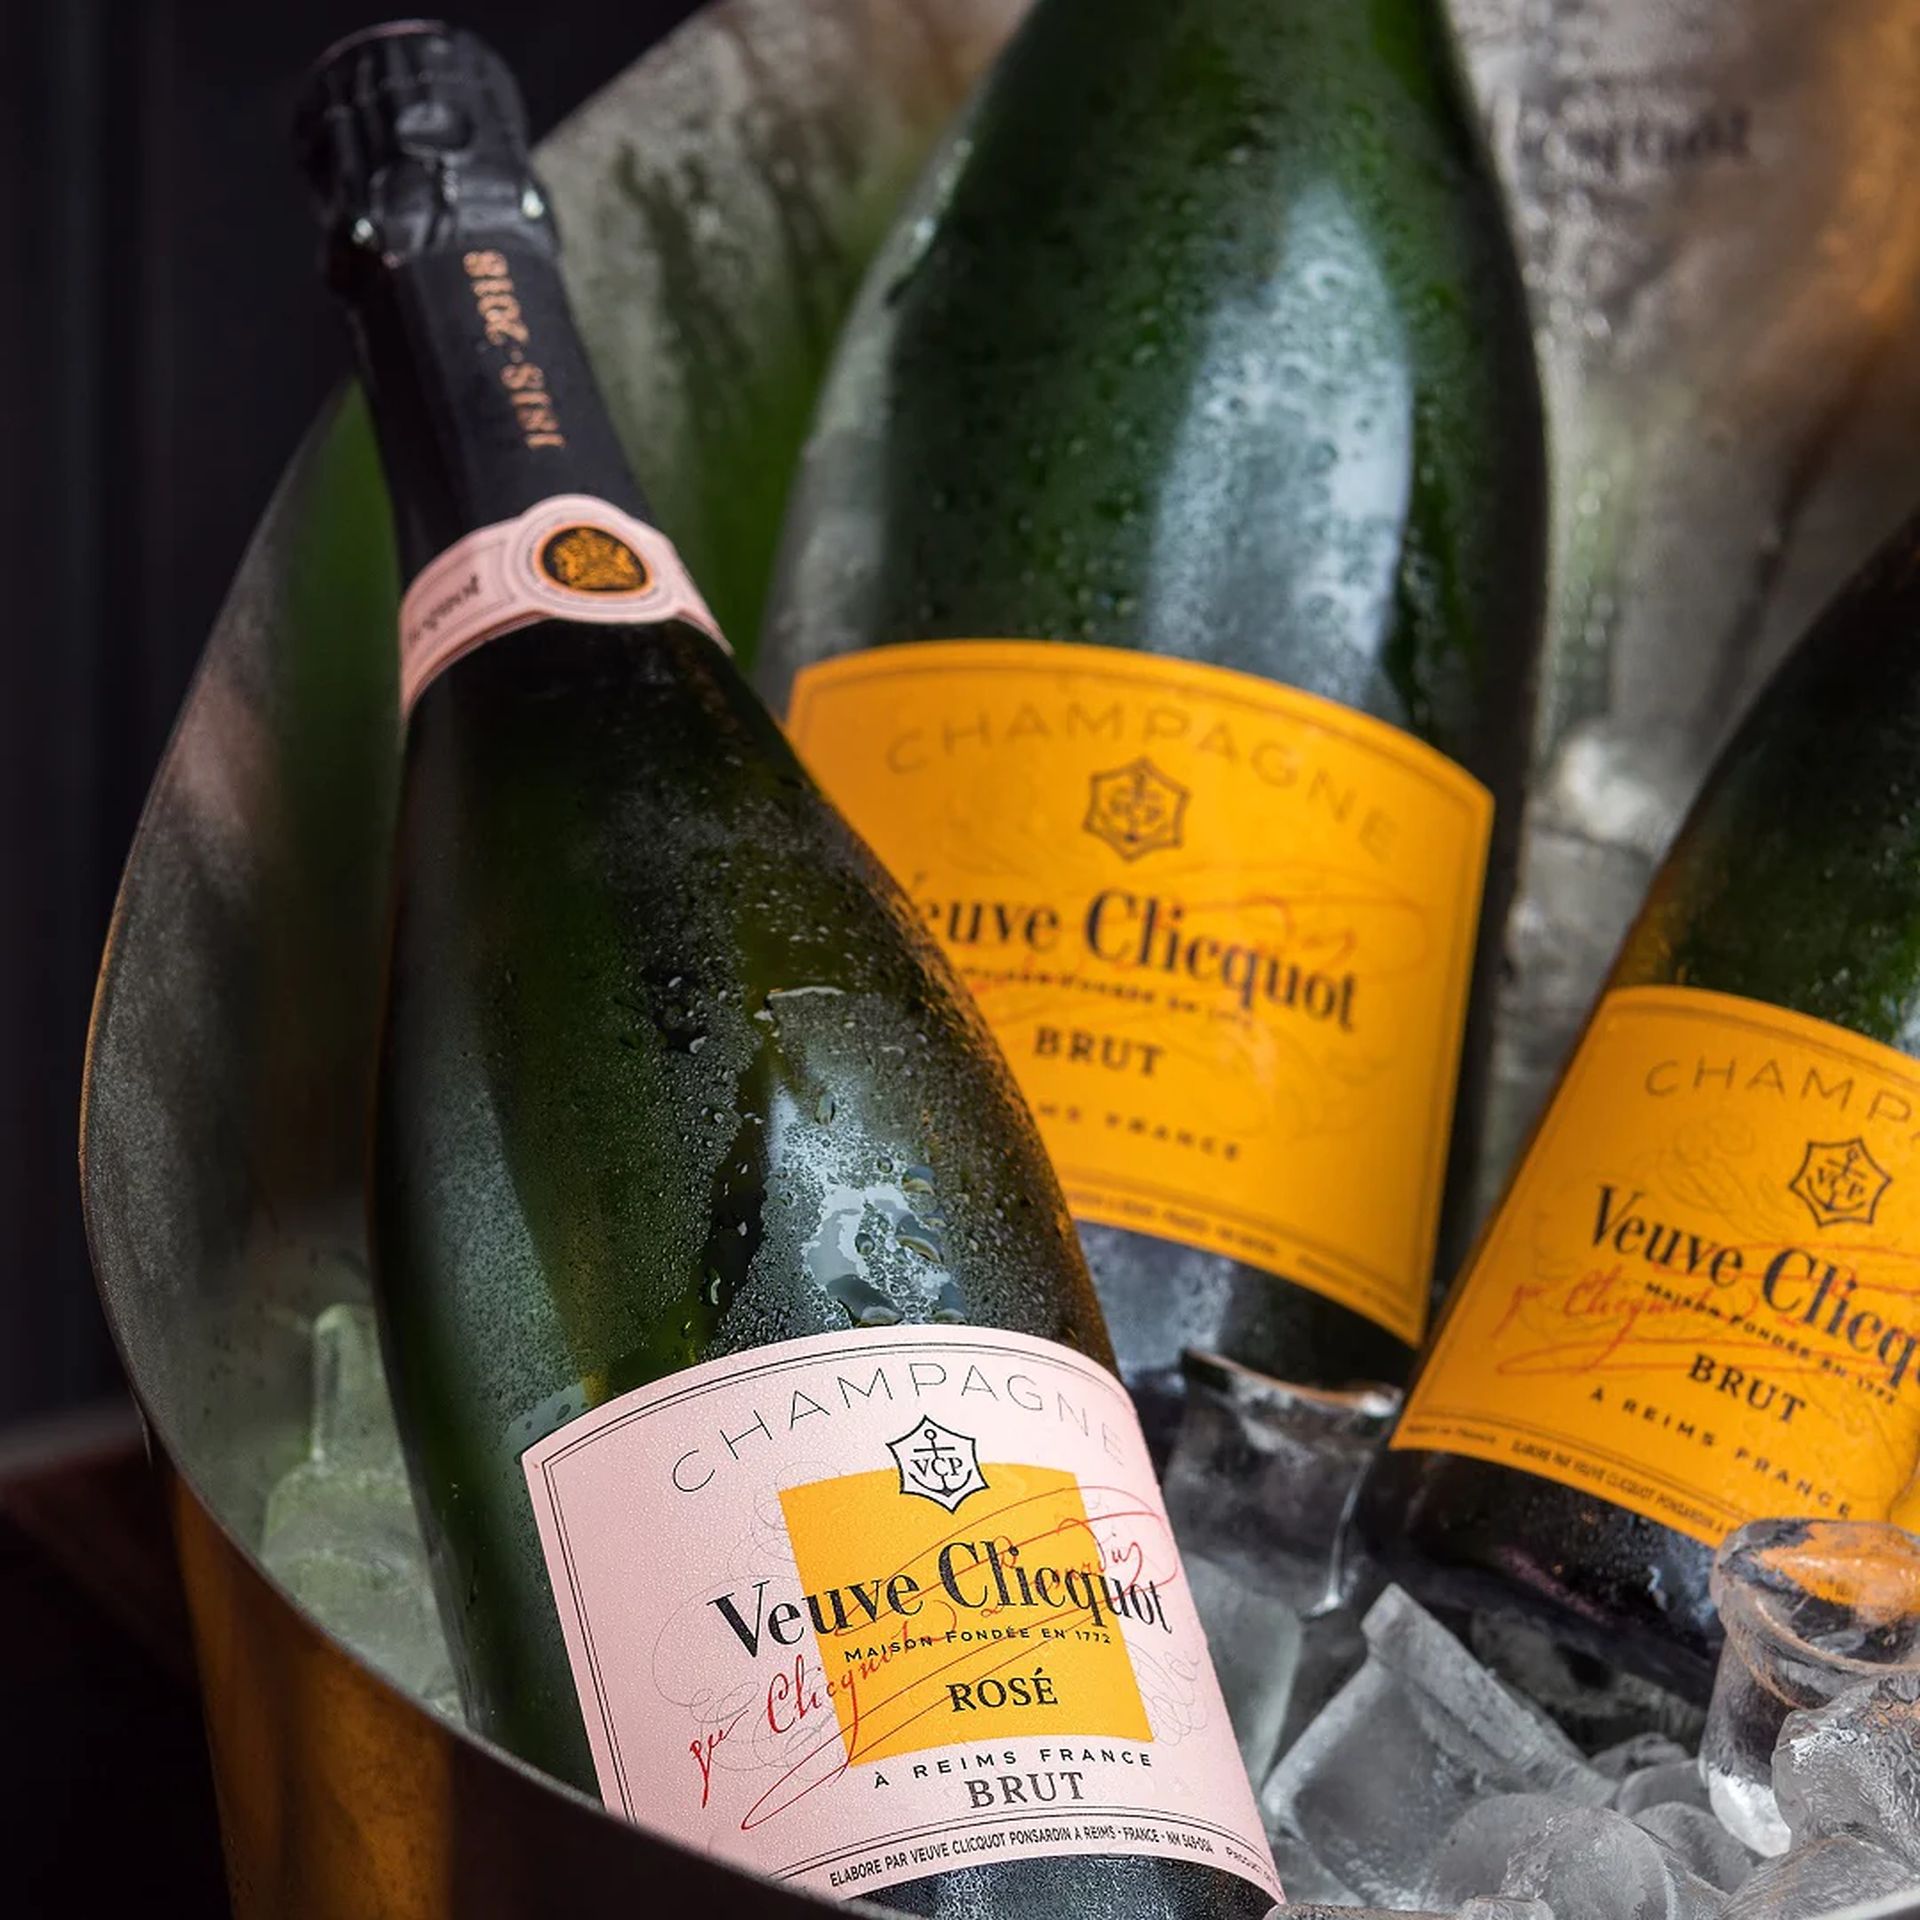 After Valentine's Day: NV Veuve Clicquot Rosé Champagne